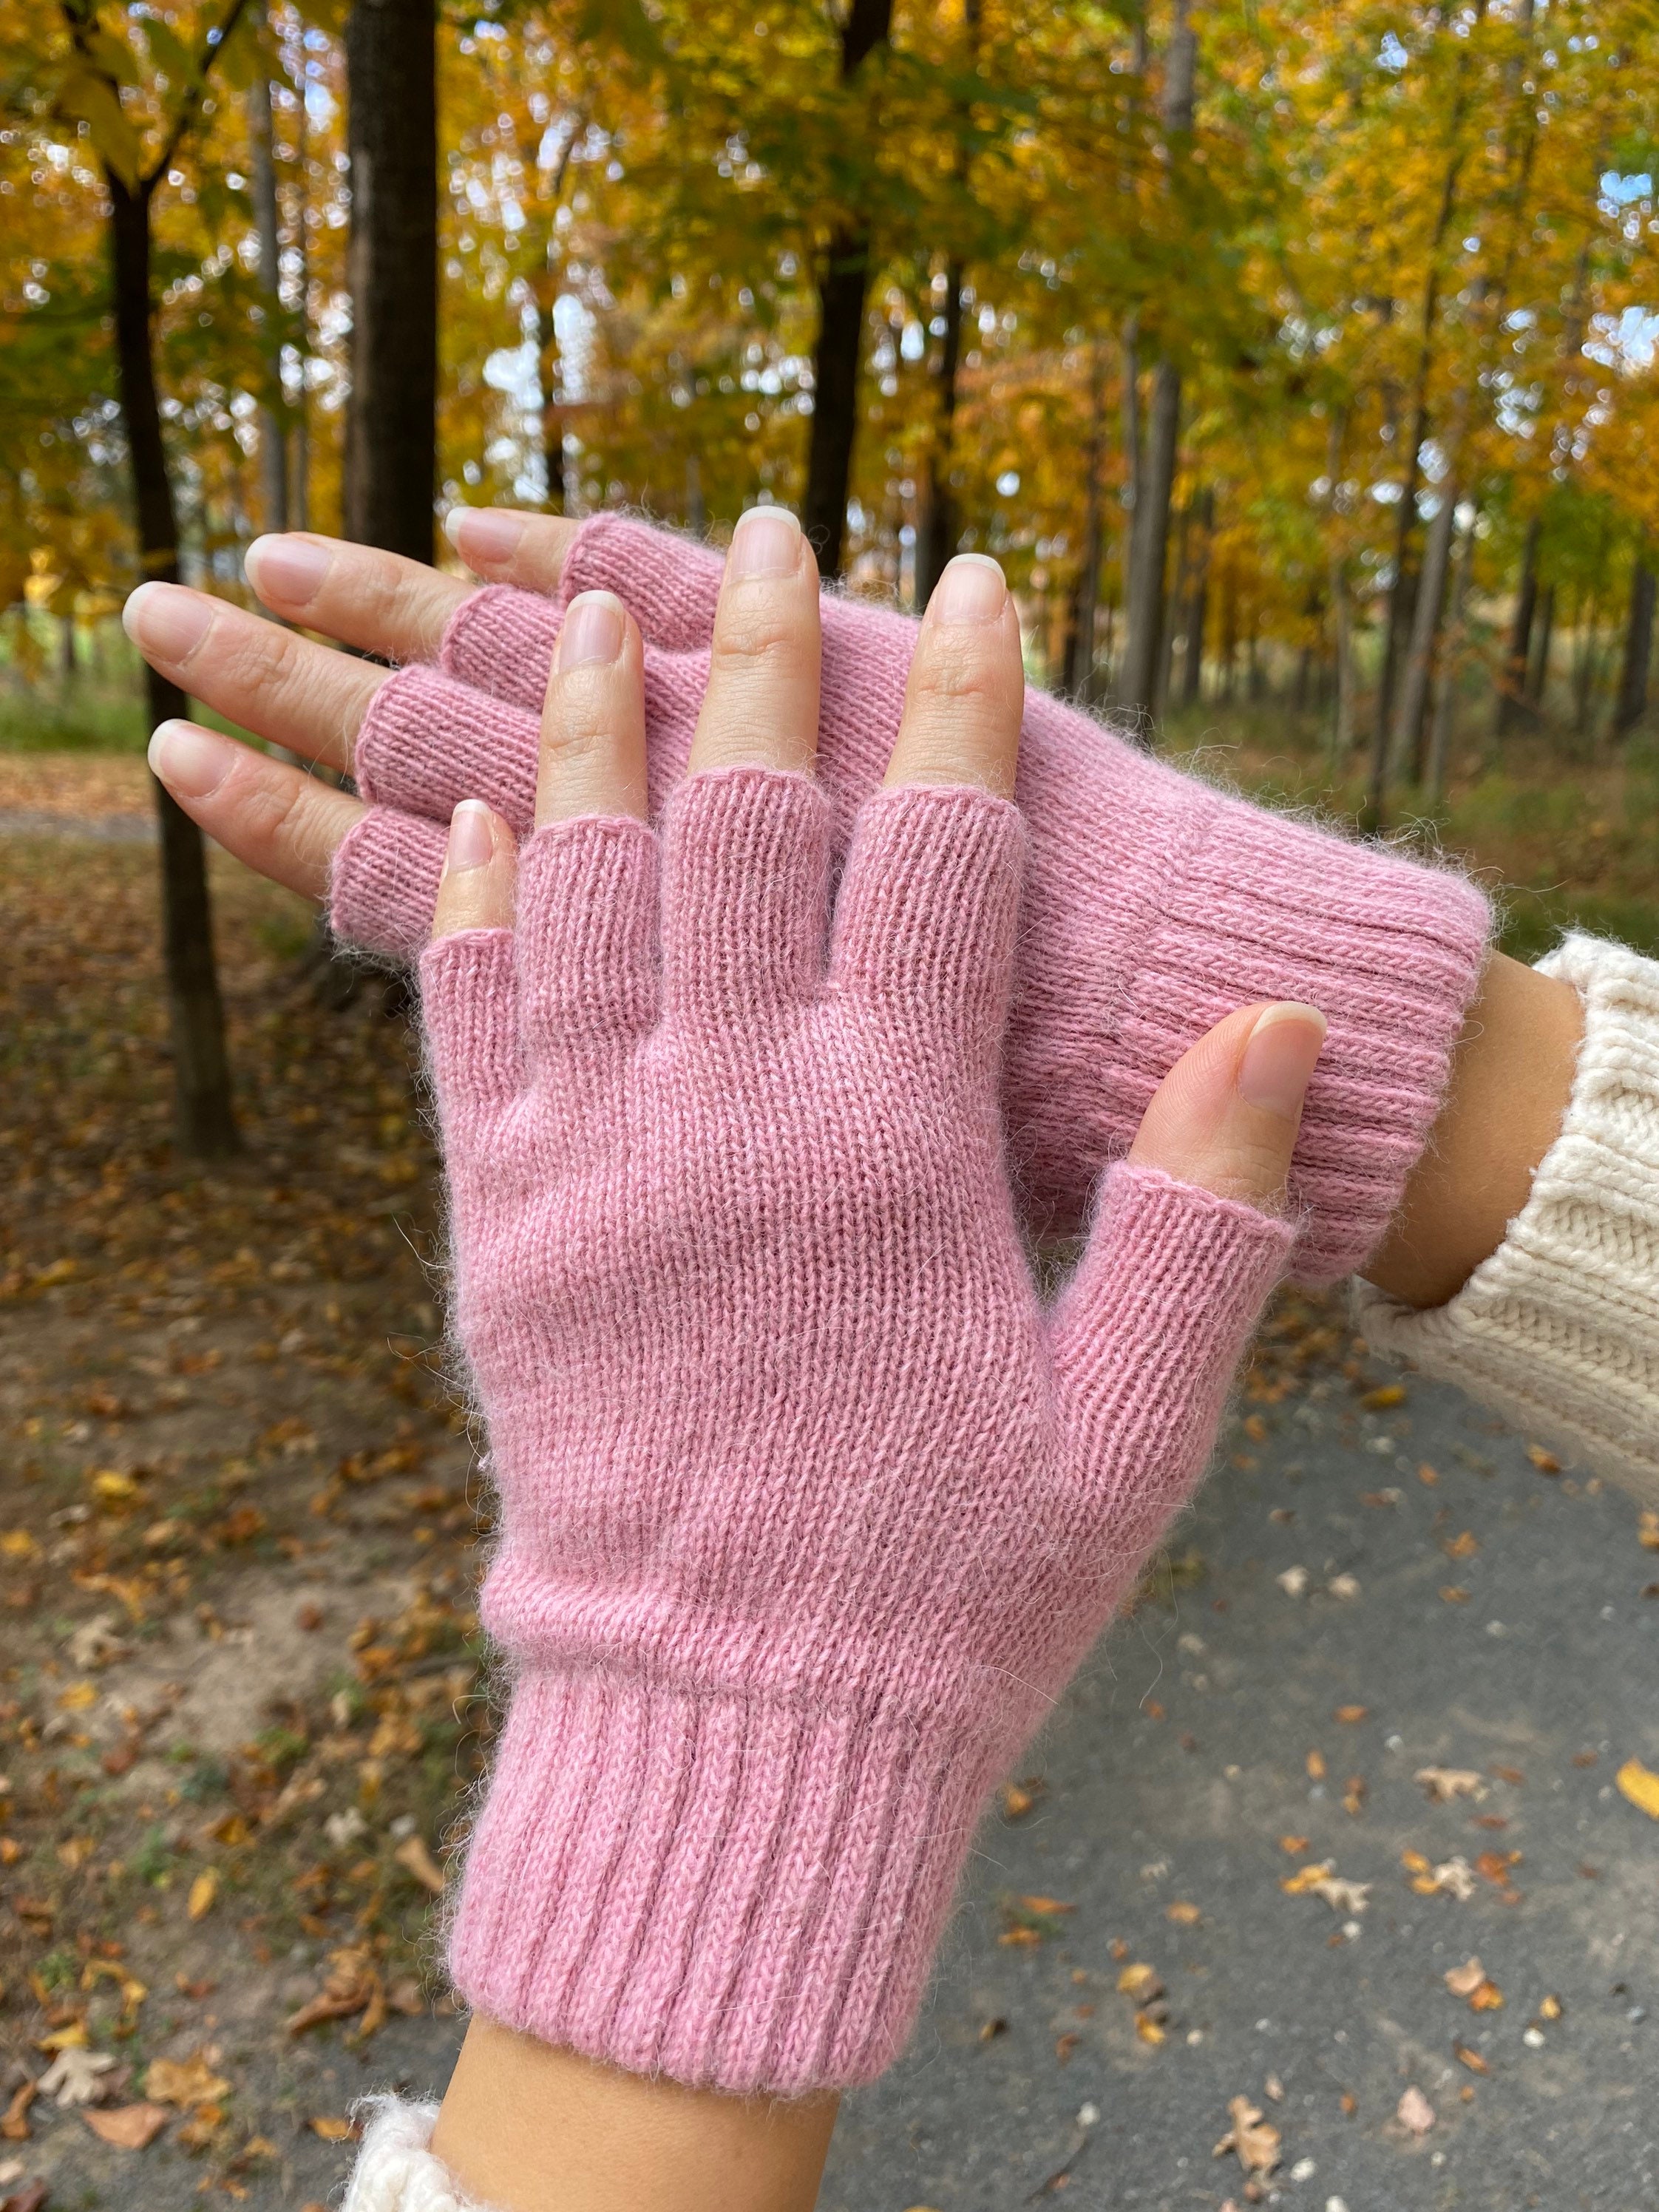 Winter Wool Half Finger Flip Gloves Winter Fingerless Gloves for Men Women  Convertible Warm Half Finger Mitten Gloves Flip Top Knitted Clamshell Wool  Gloves